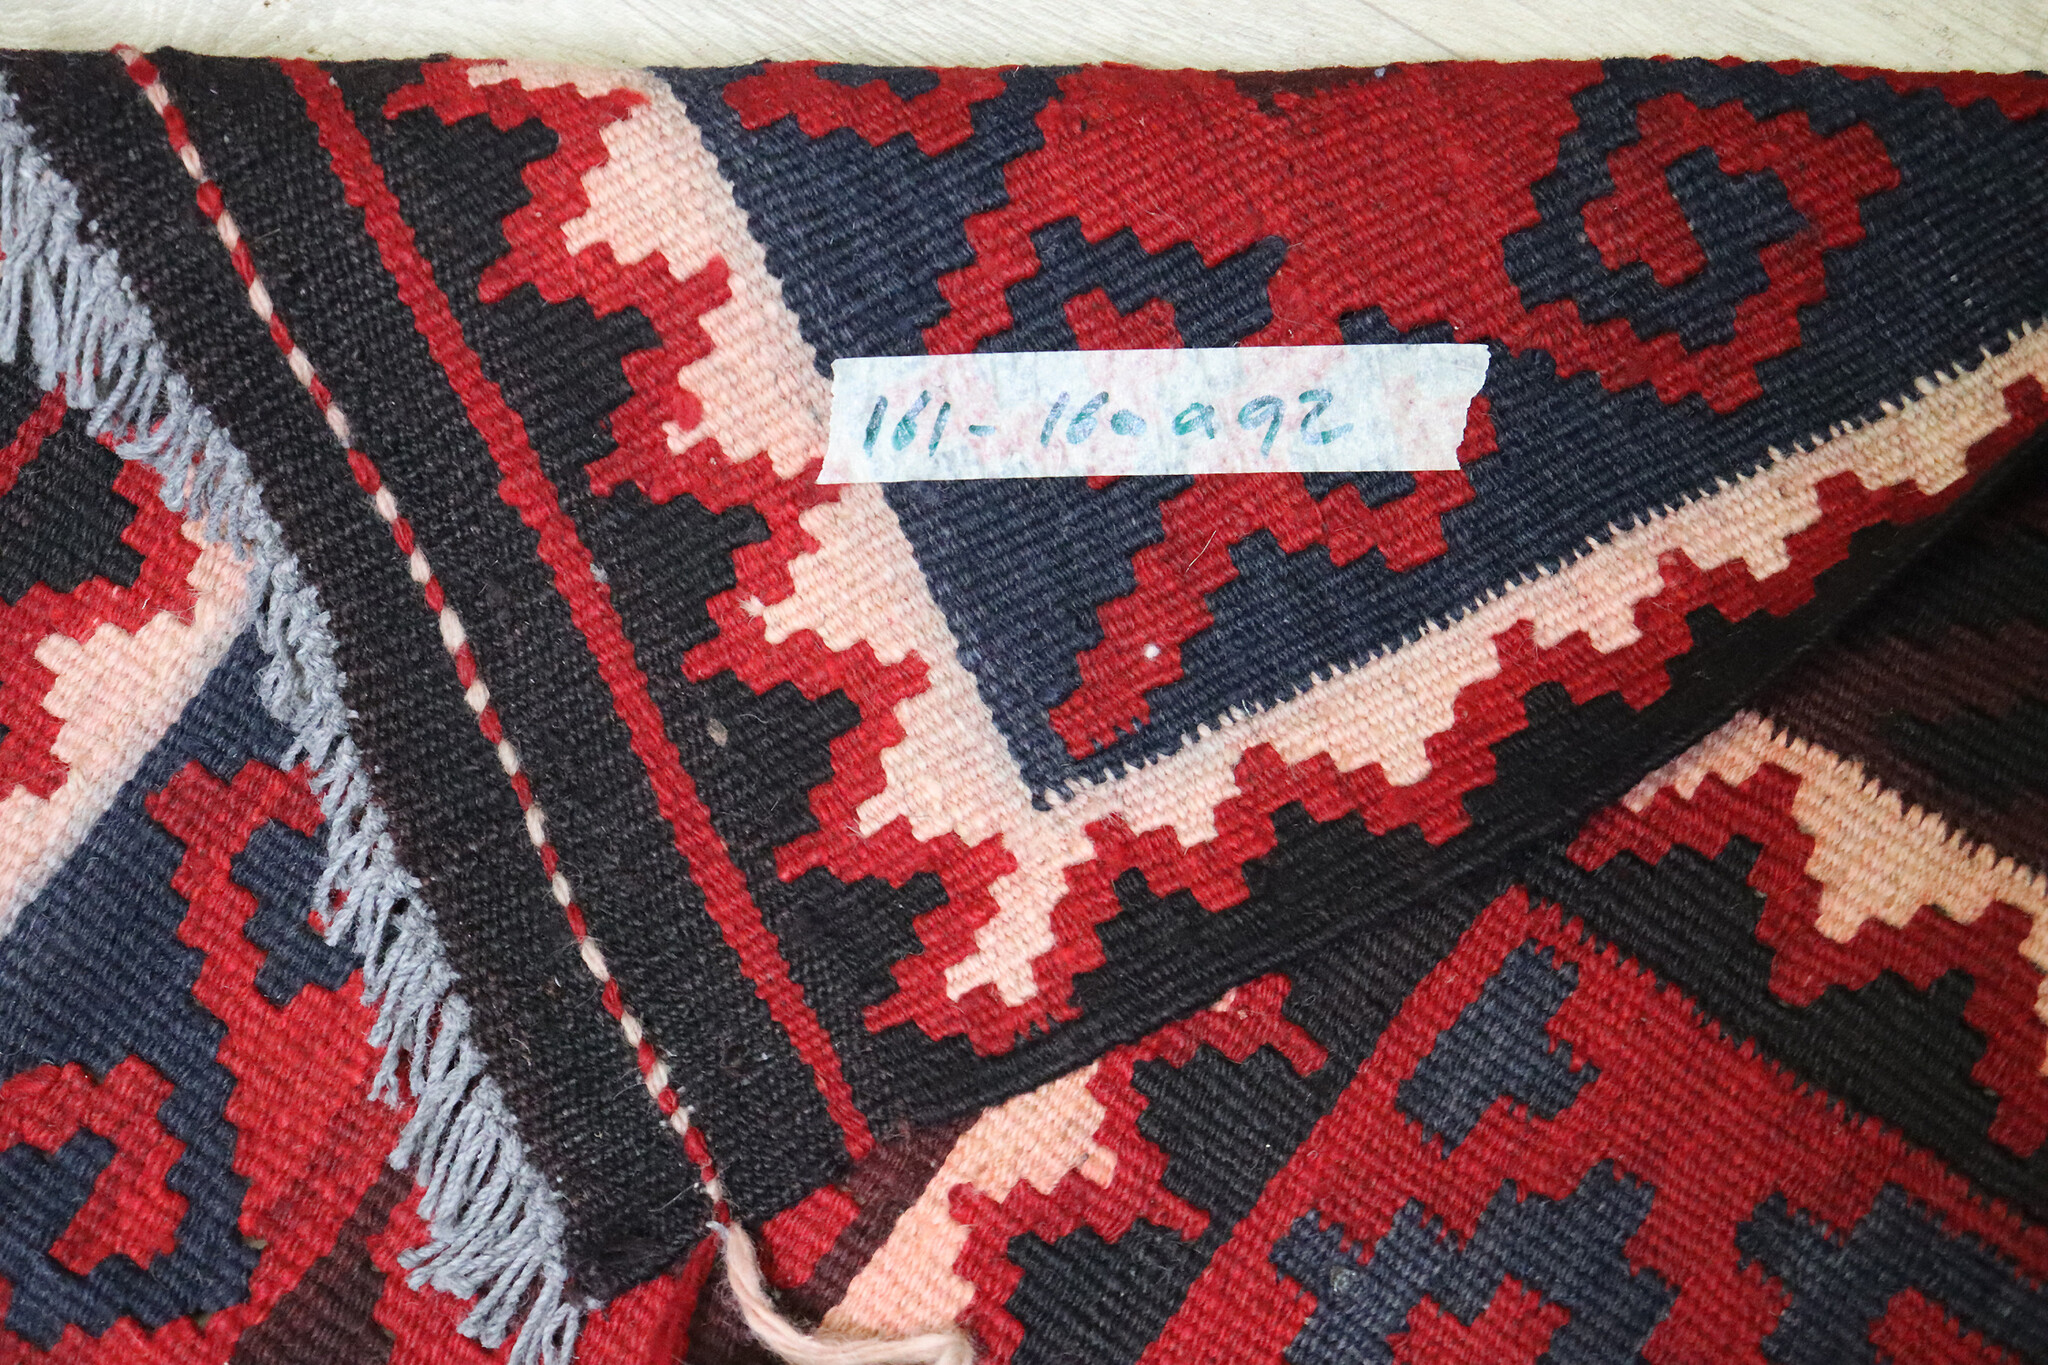 160x92 cm Afghan   nomadic Kilim rug  No:161